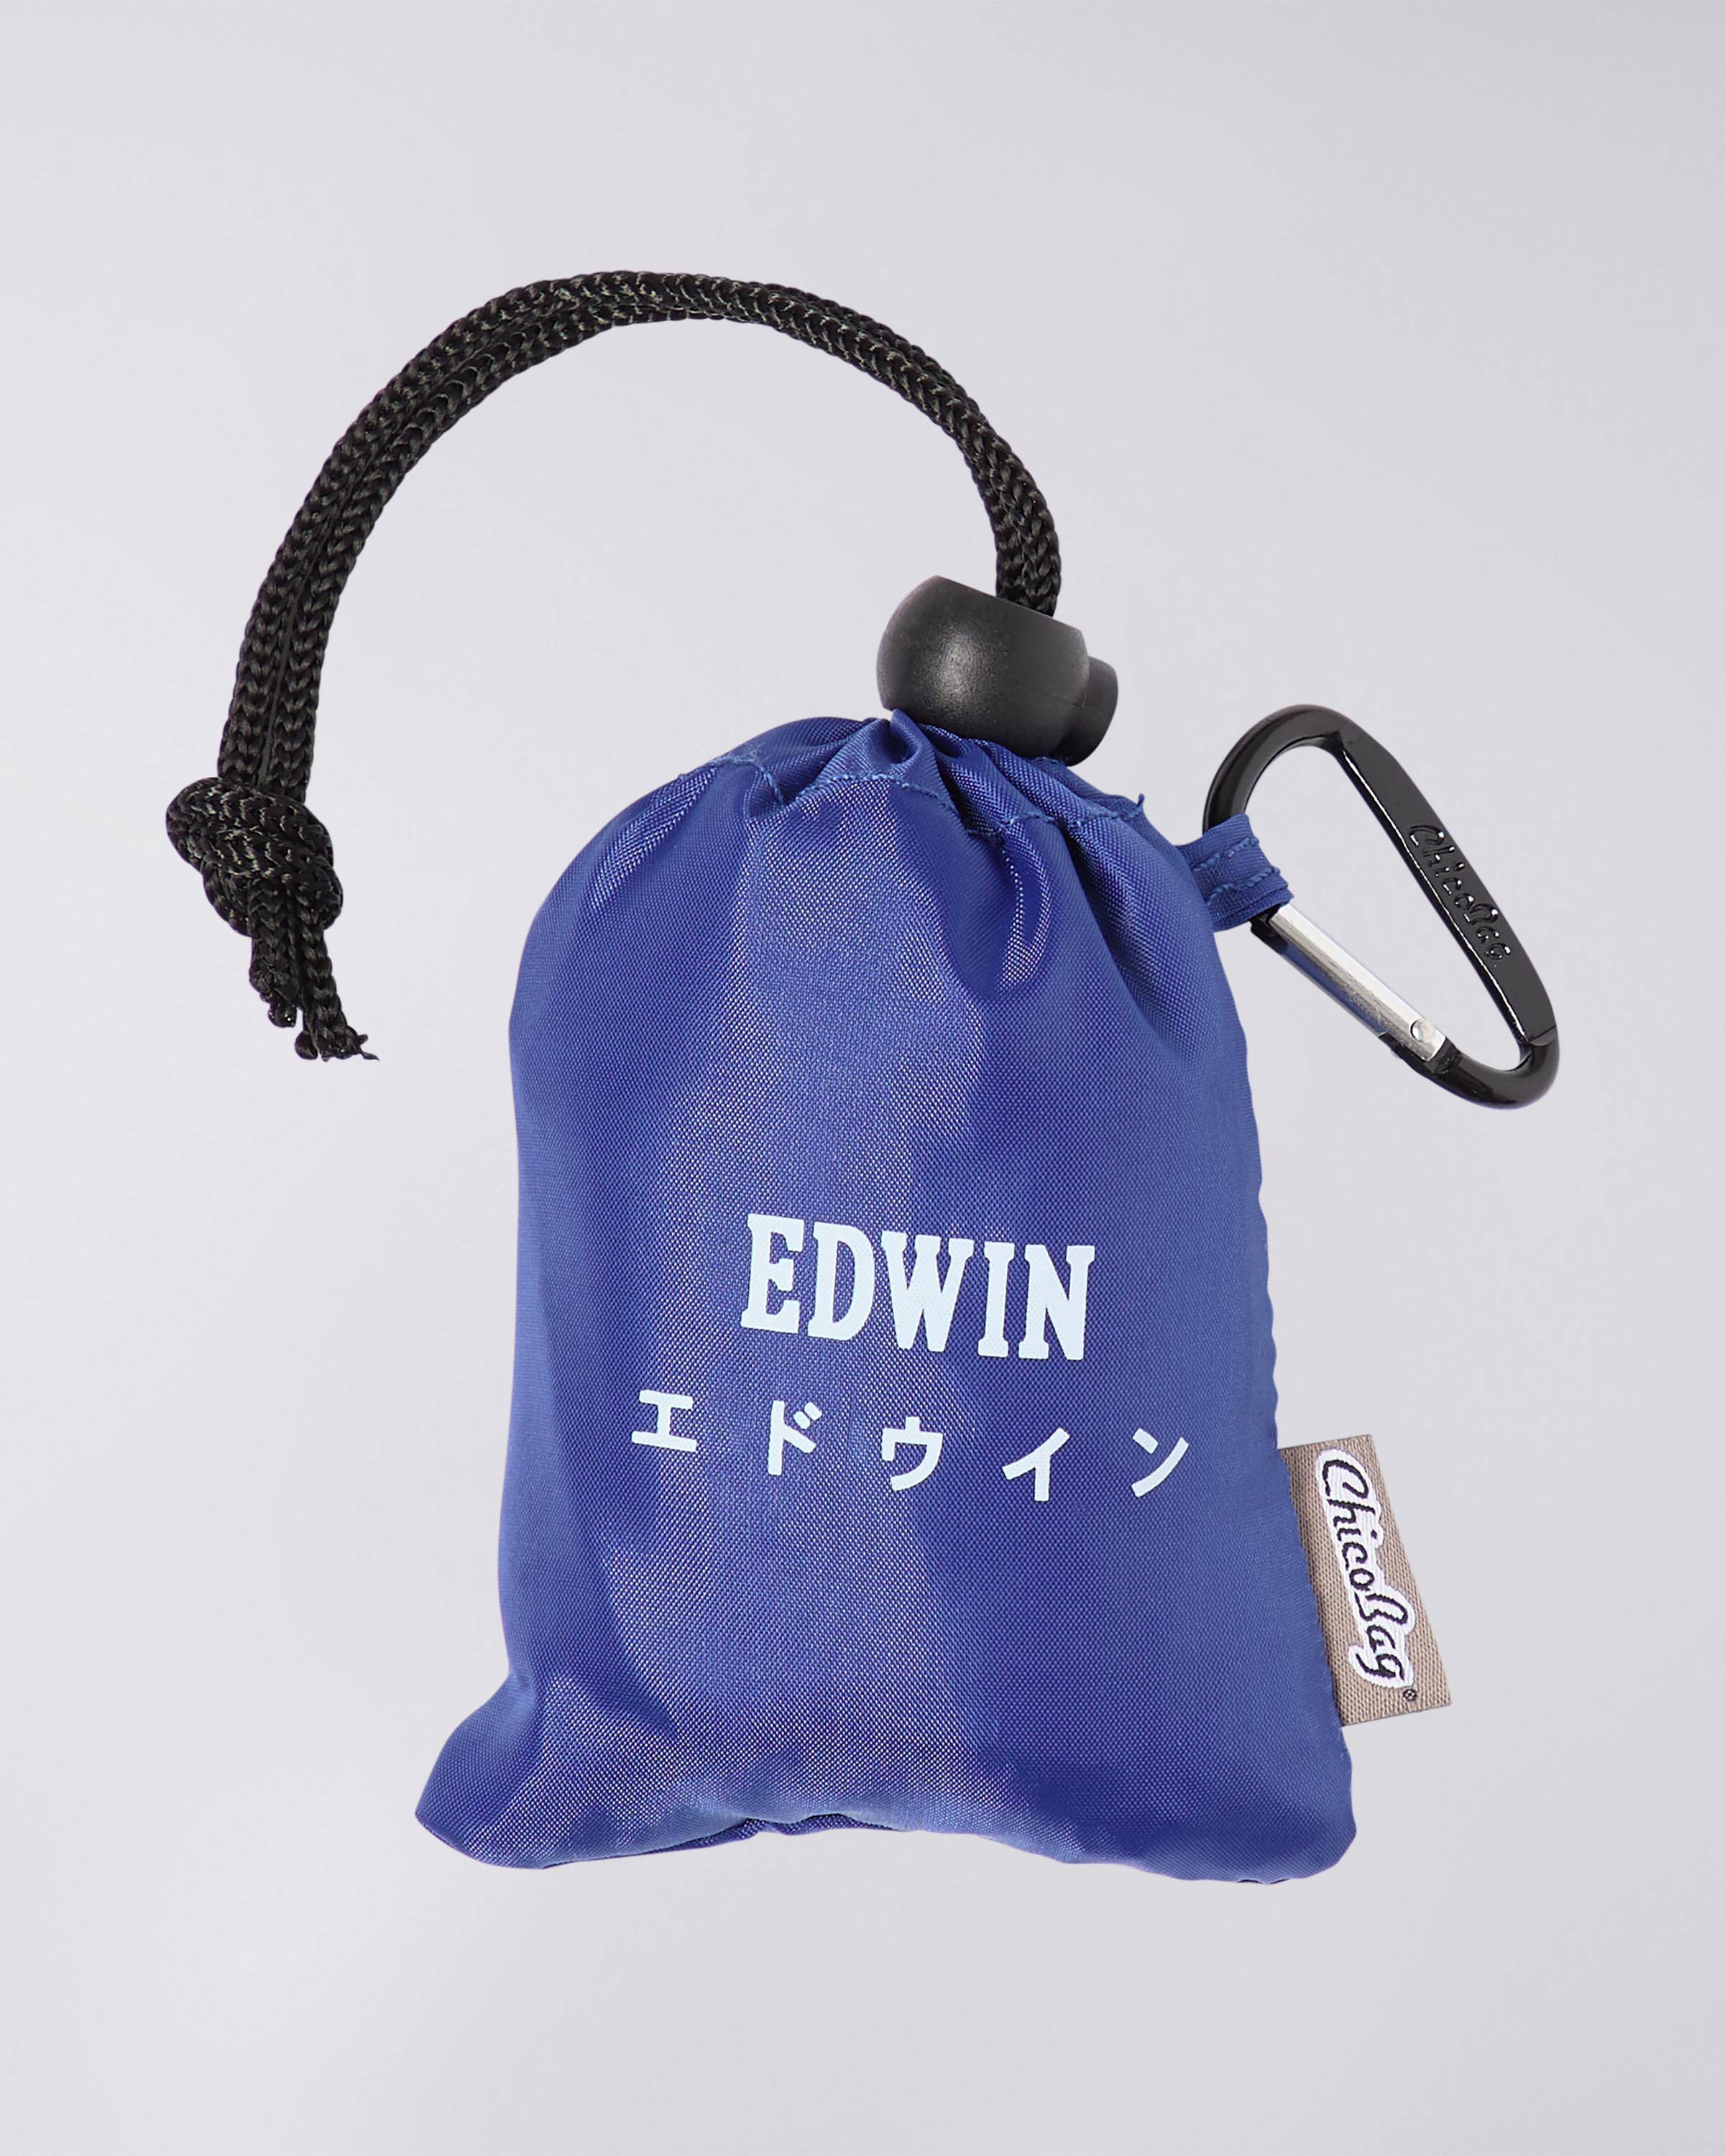 Edwin x Chico Bag